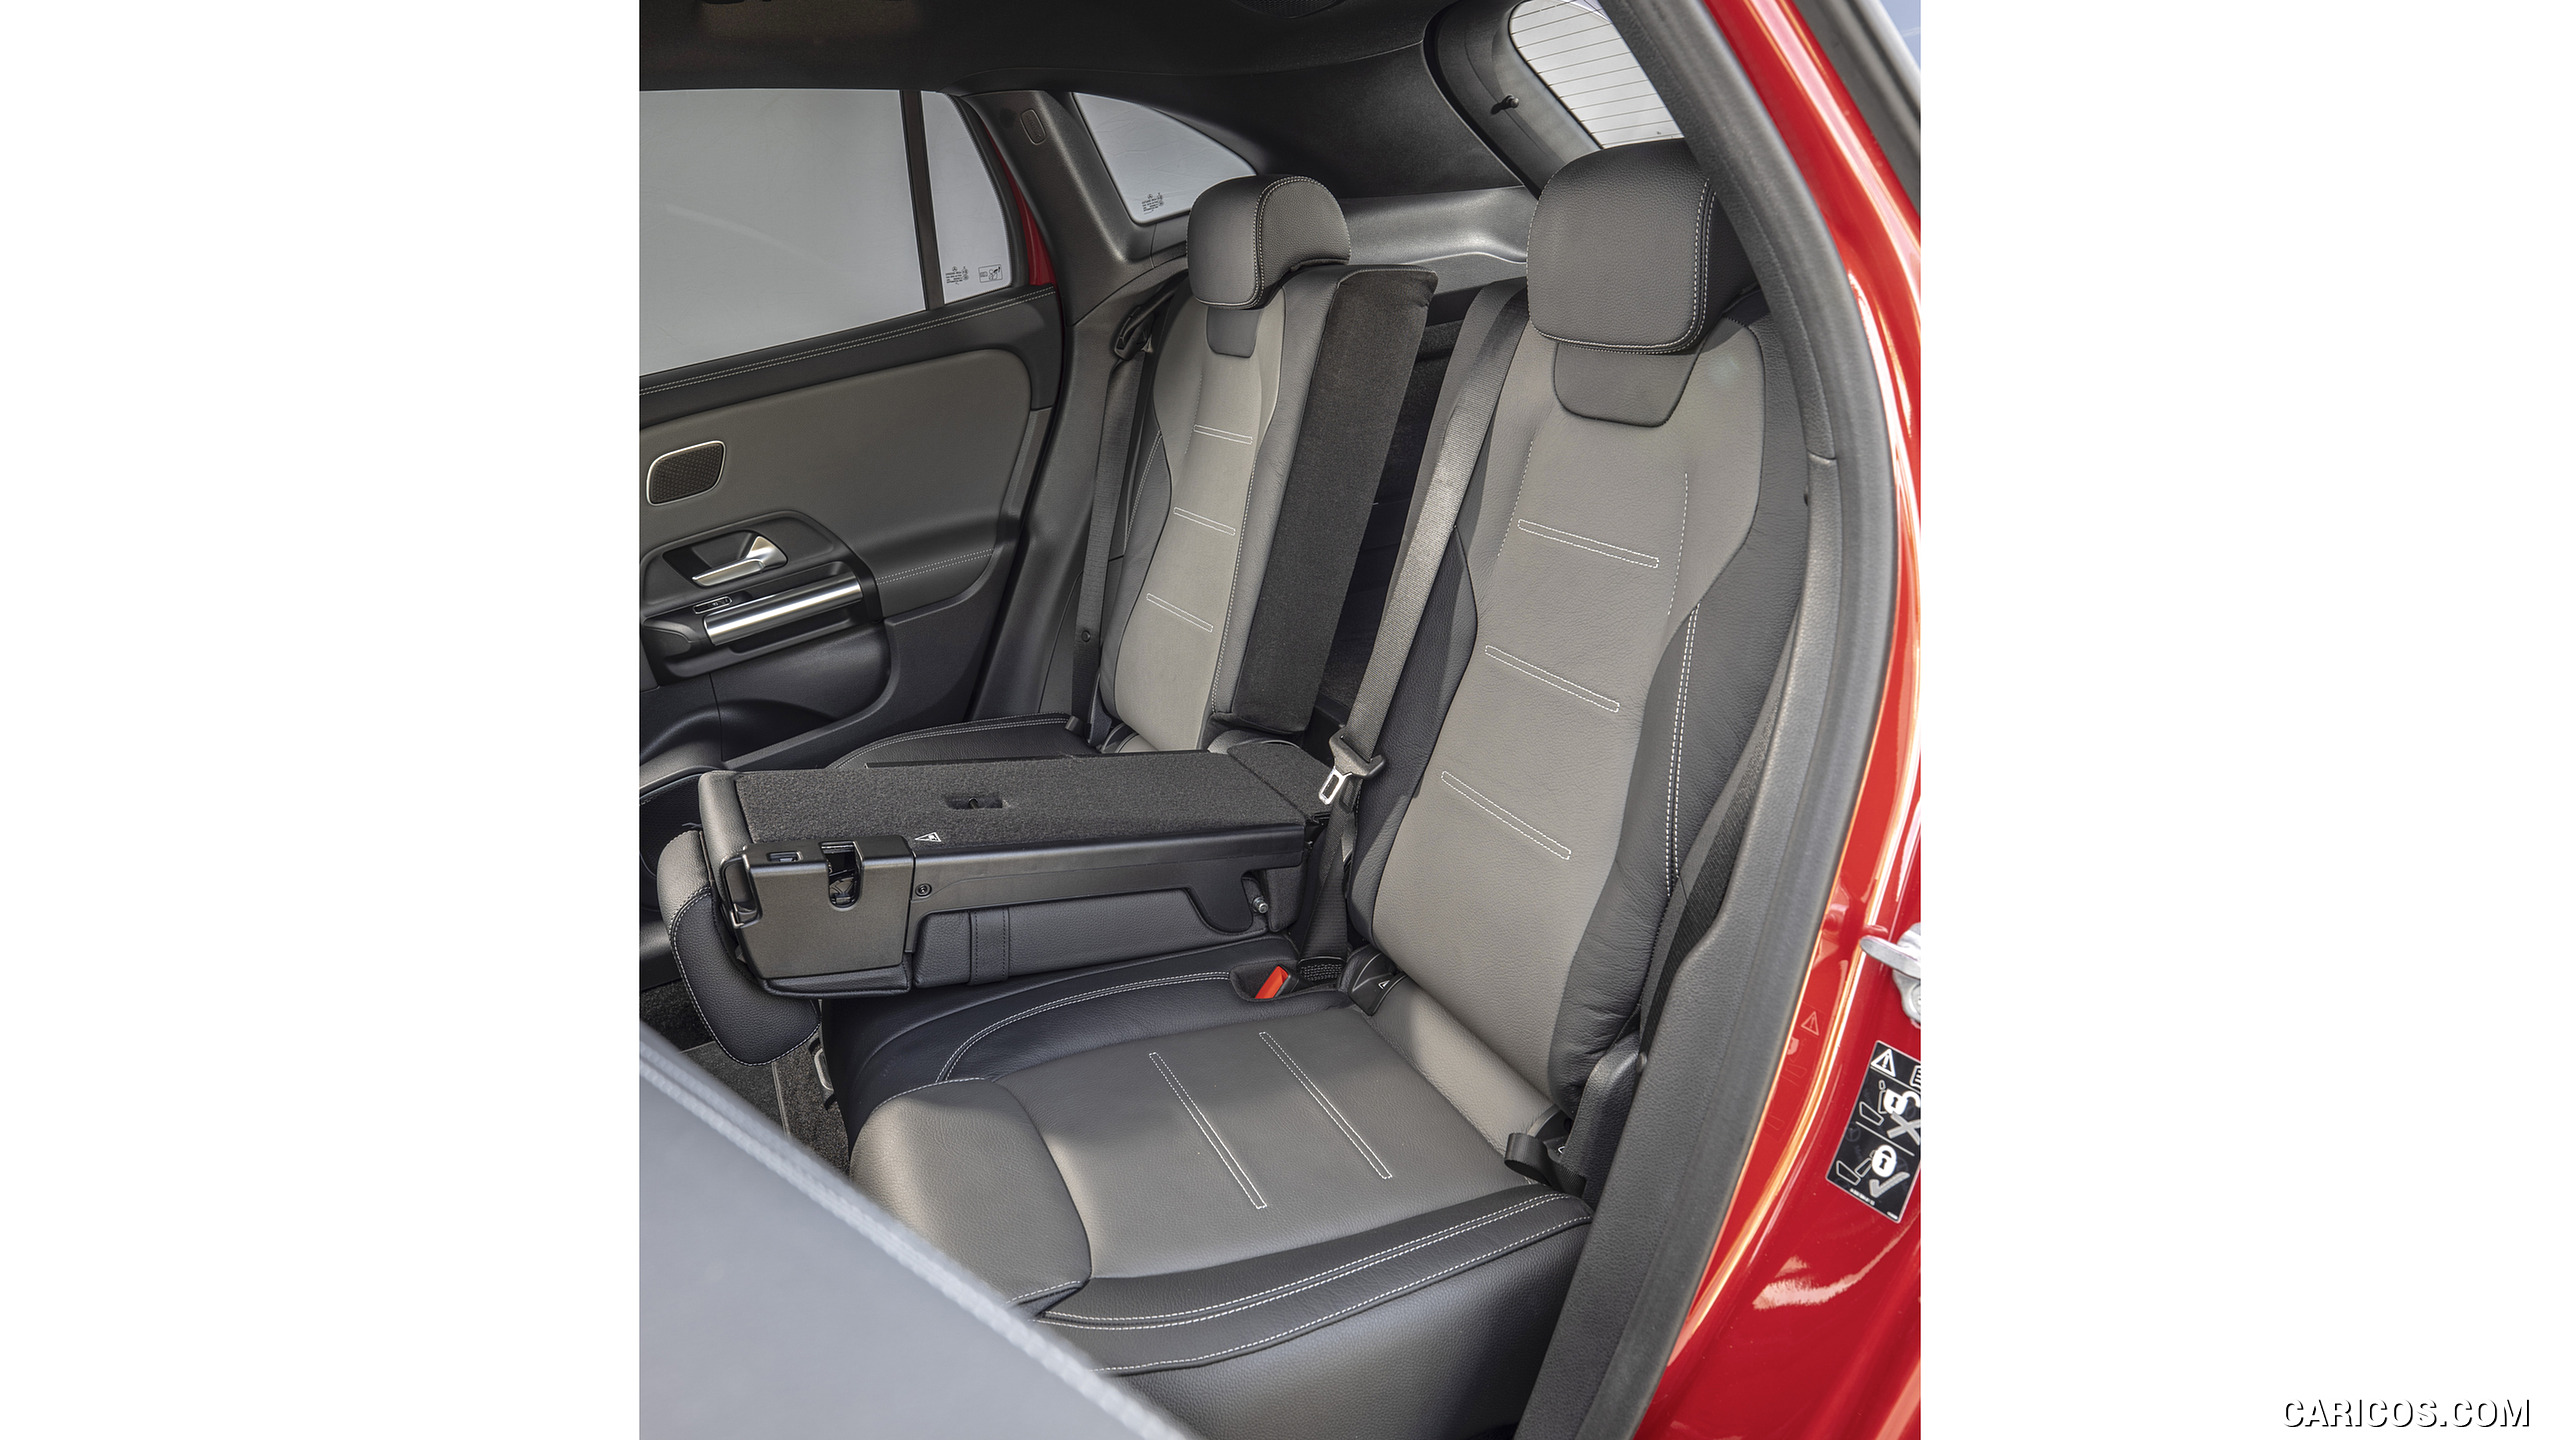 2021 Mercedes-AMG GLA 35 4MATIC - Interior, Rear Seats, #61 of 104